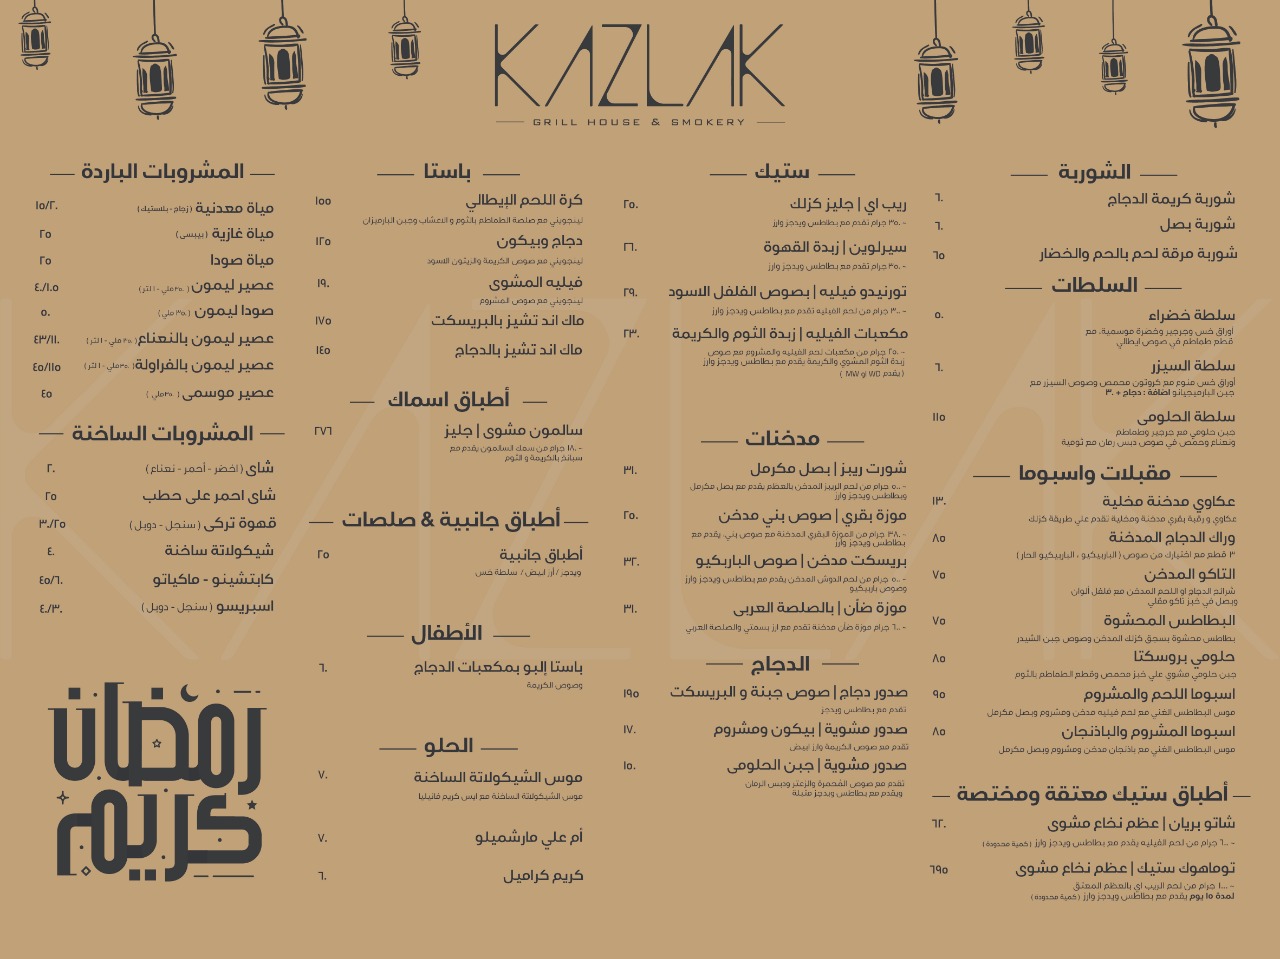 Kazlak Arabic menu Ramadan